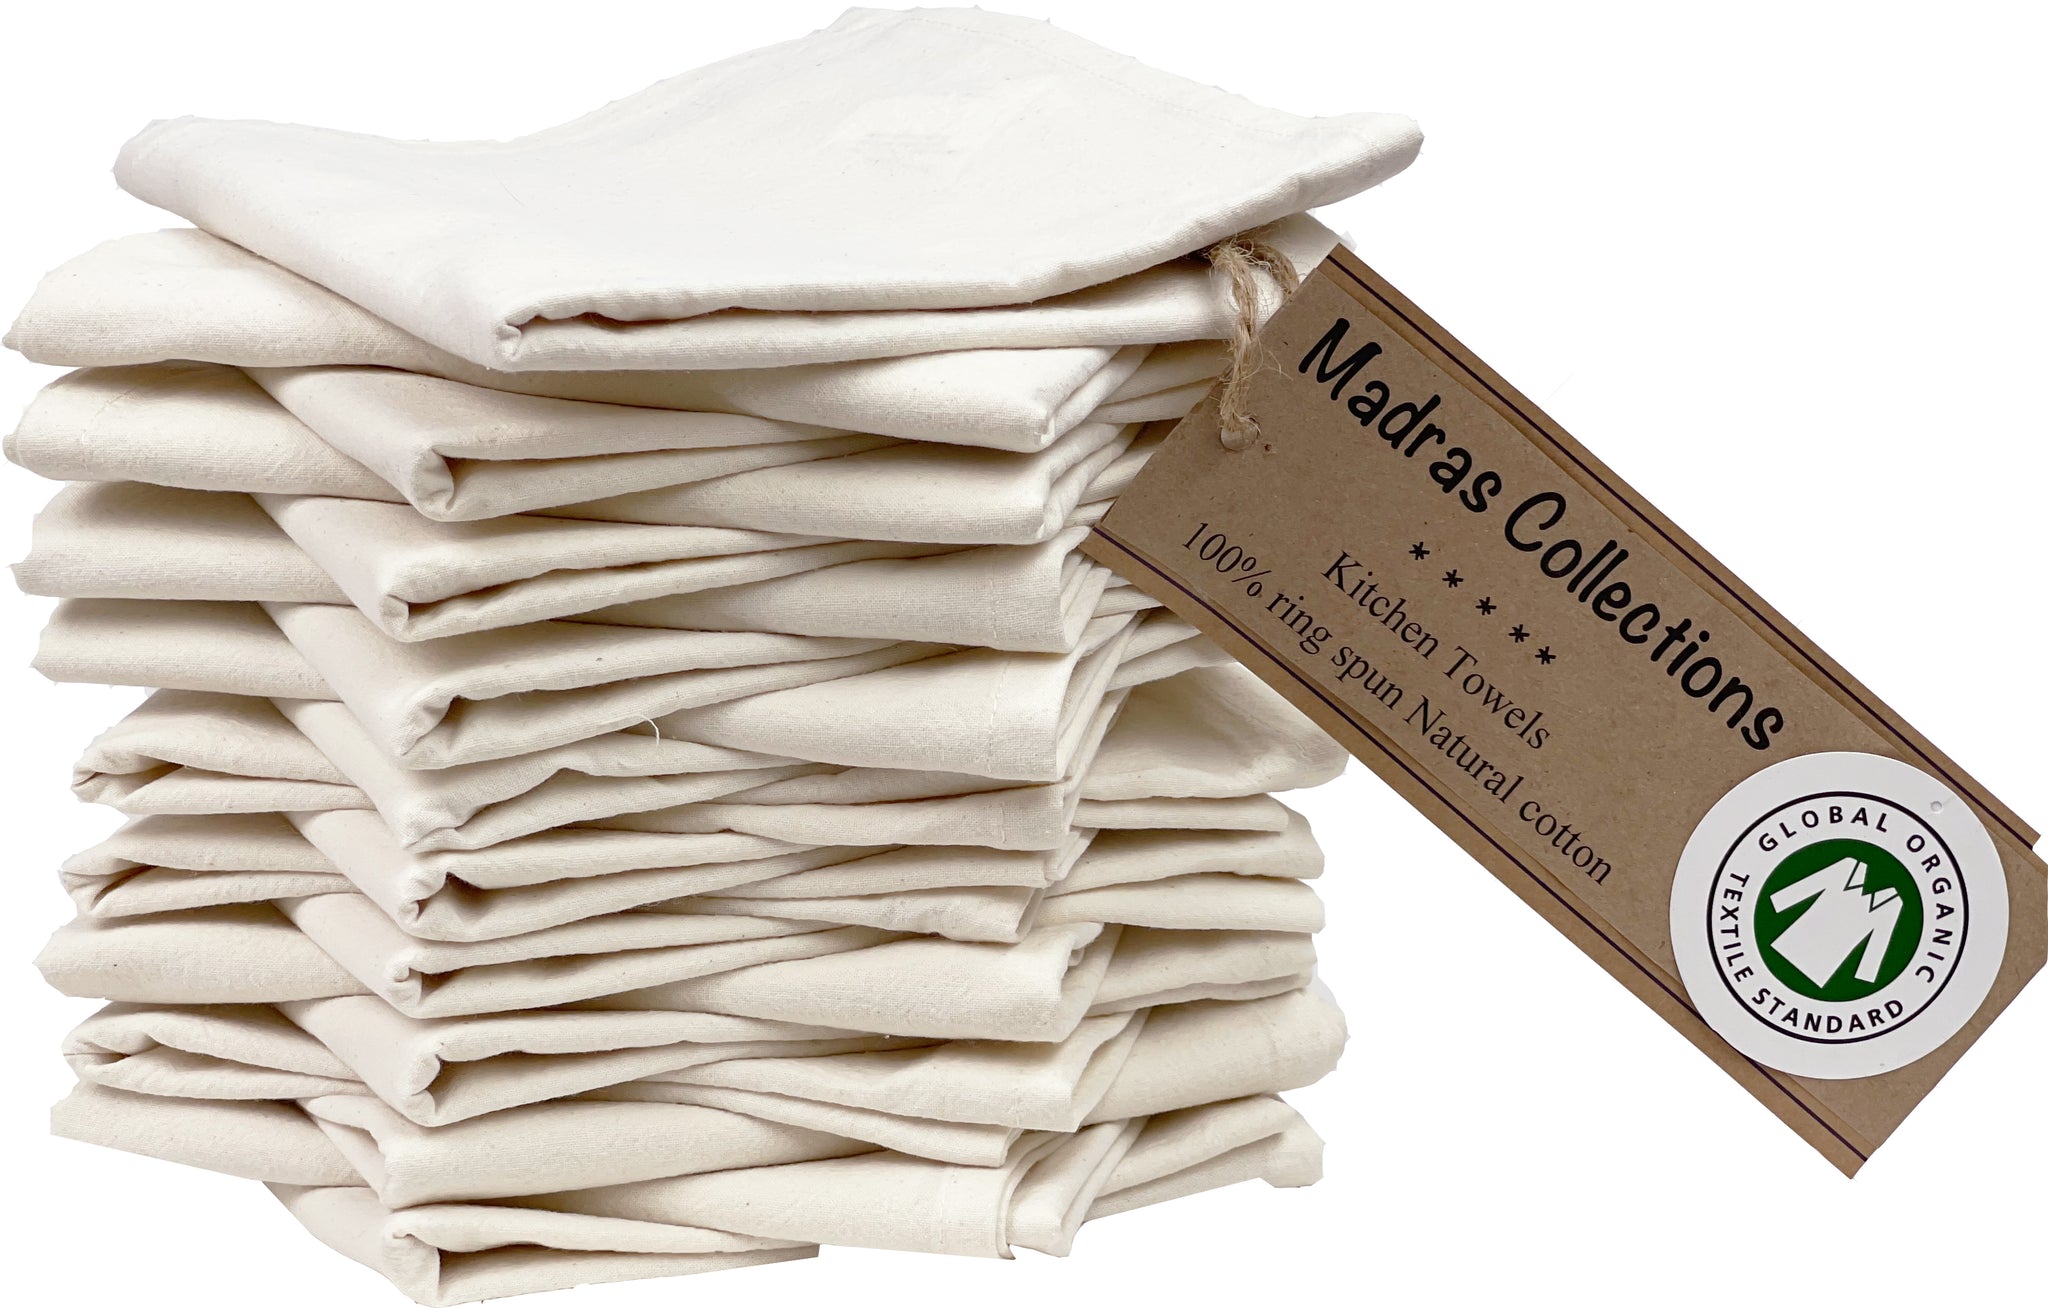 Certified Organic Flour Sack Towels-Wholesale- Color Ivory- Each